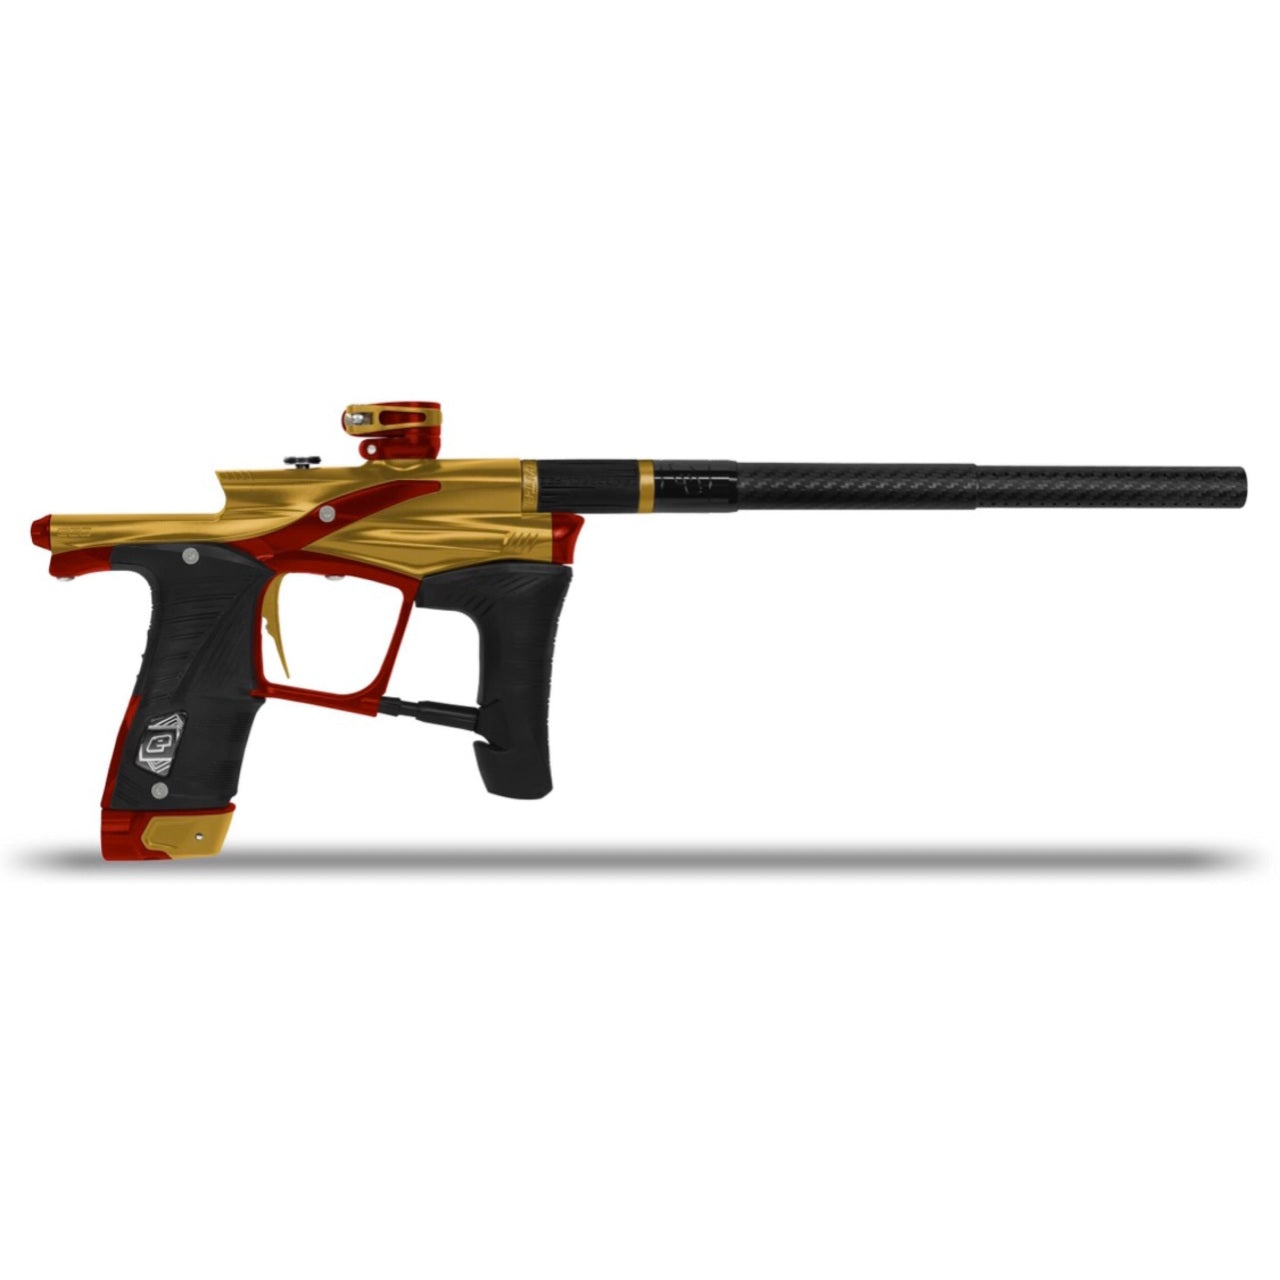 Eclipse Ego Lv1.6 Paintball Gun